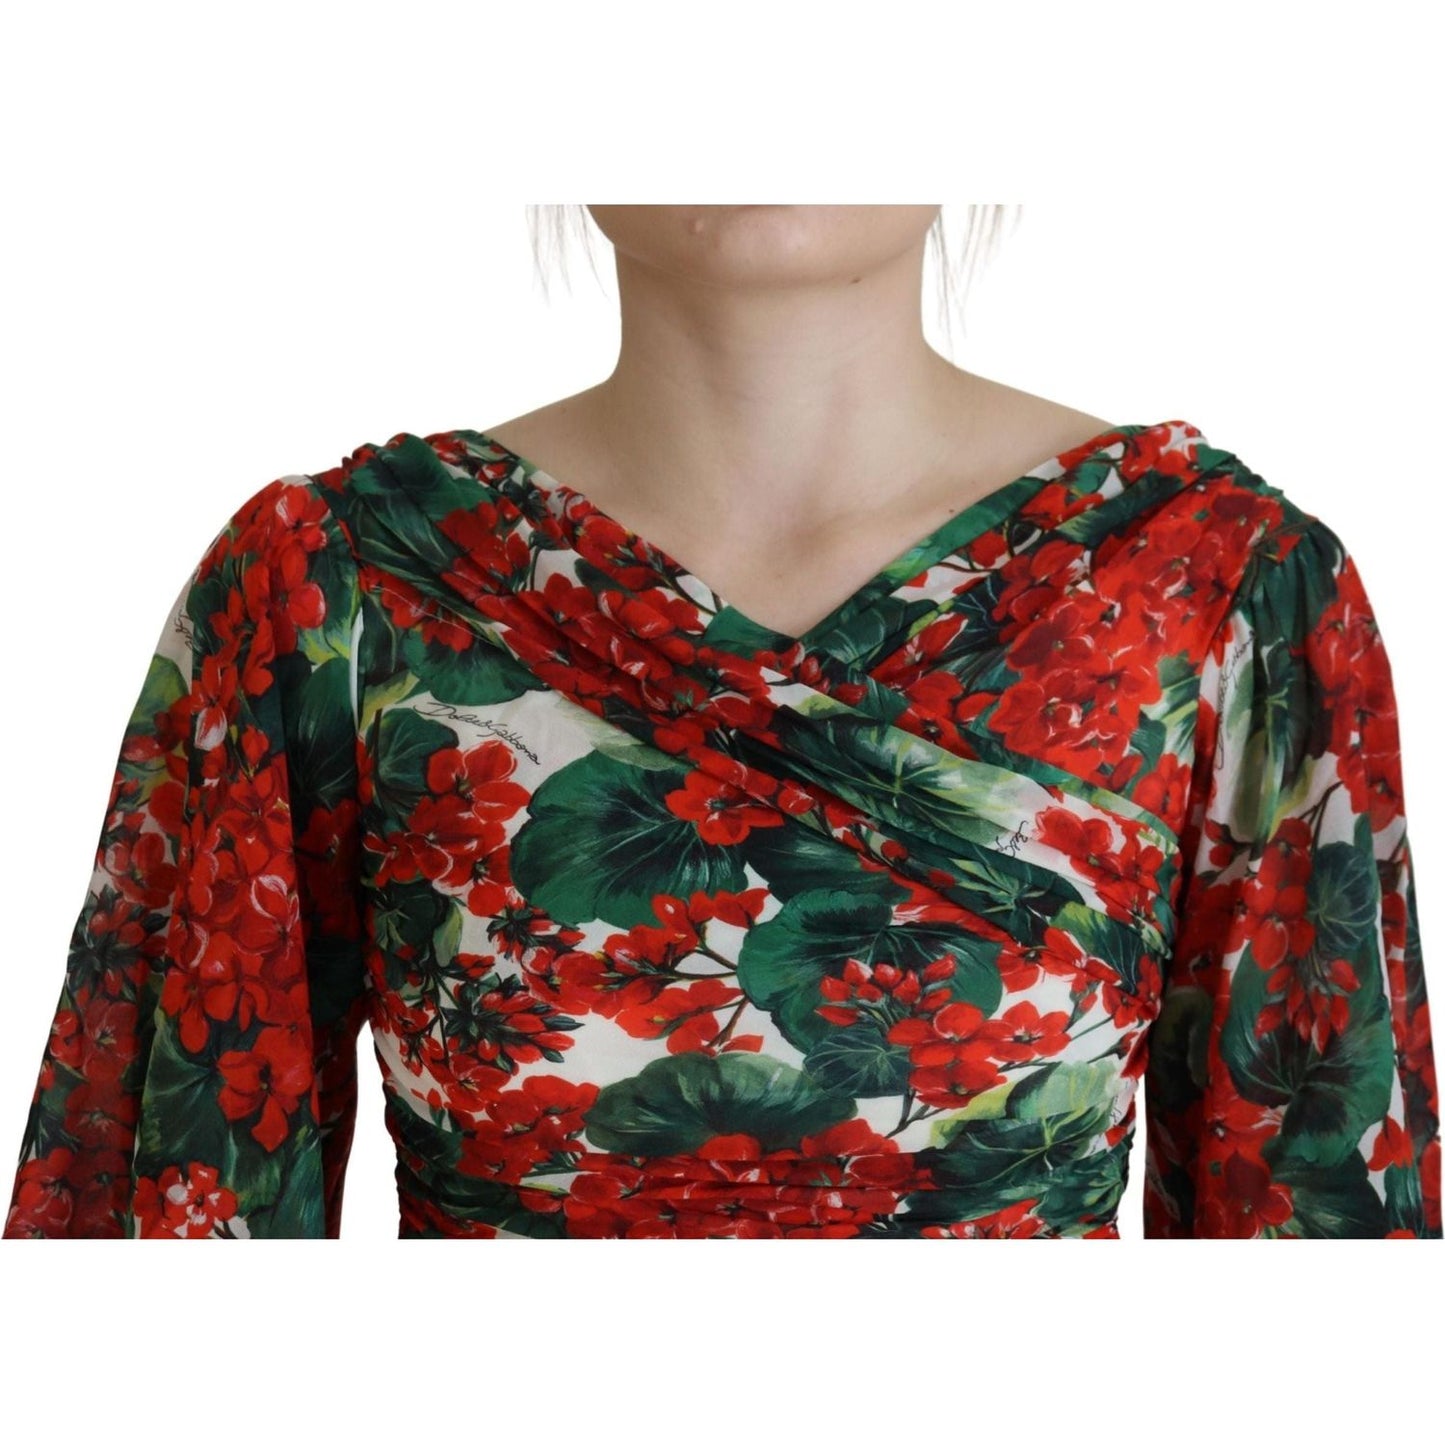 Dolce & Gabbana Enchanting Floral Print Sheath Dress multicolor-geranium-silk-sheath-midi-dress